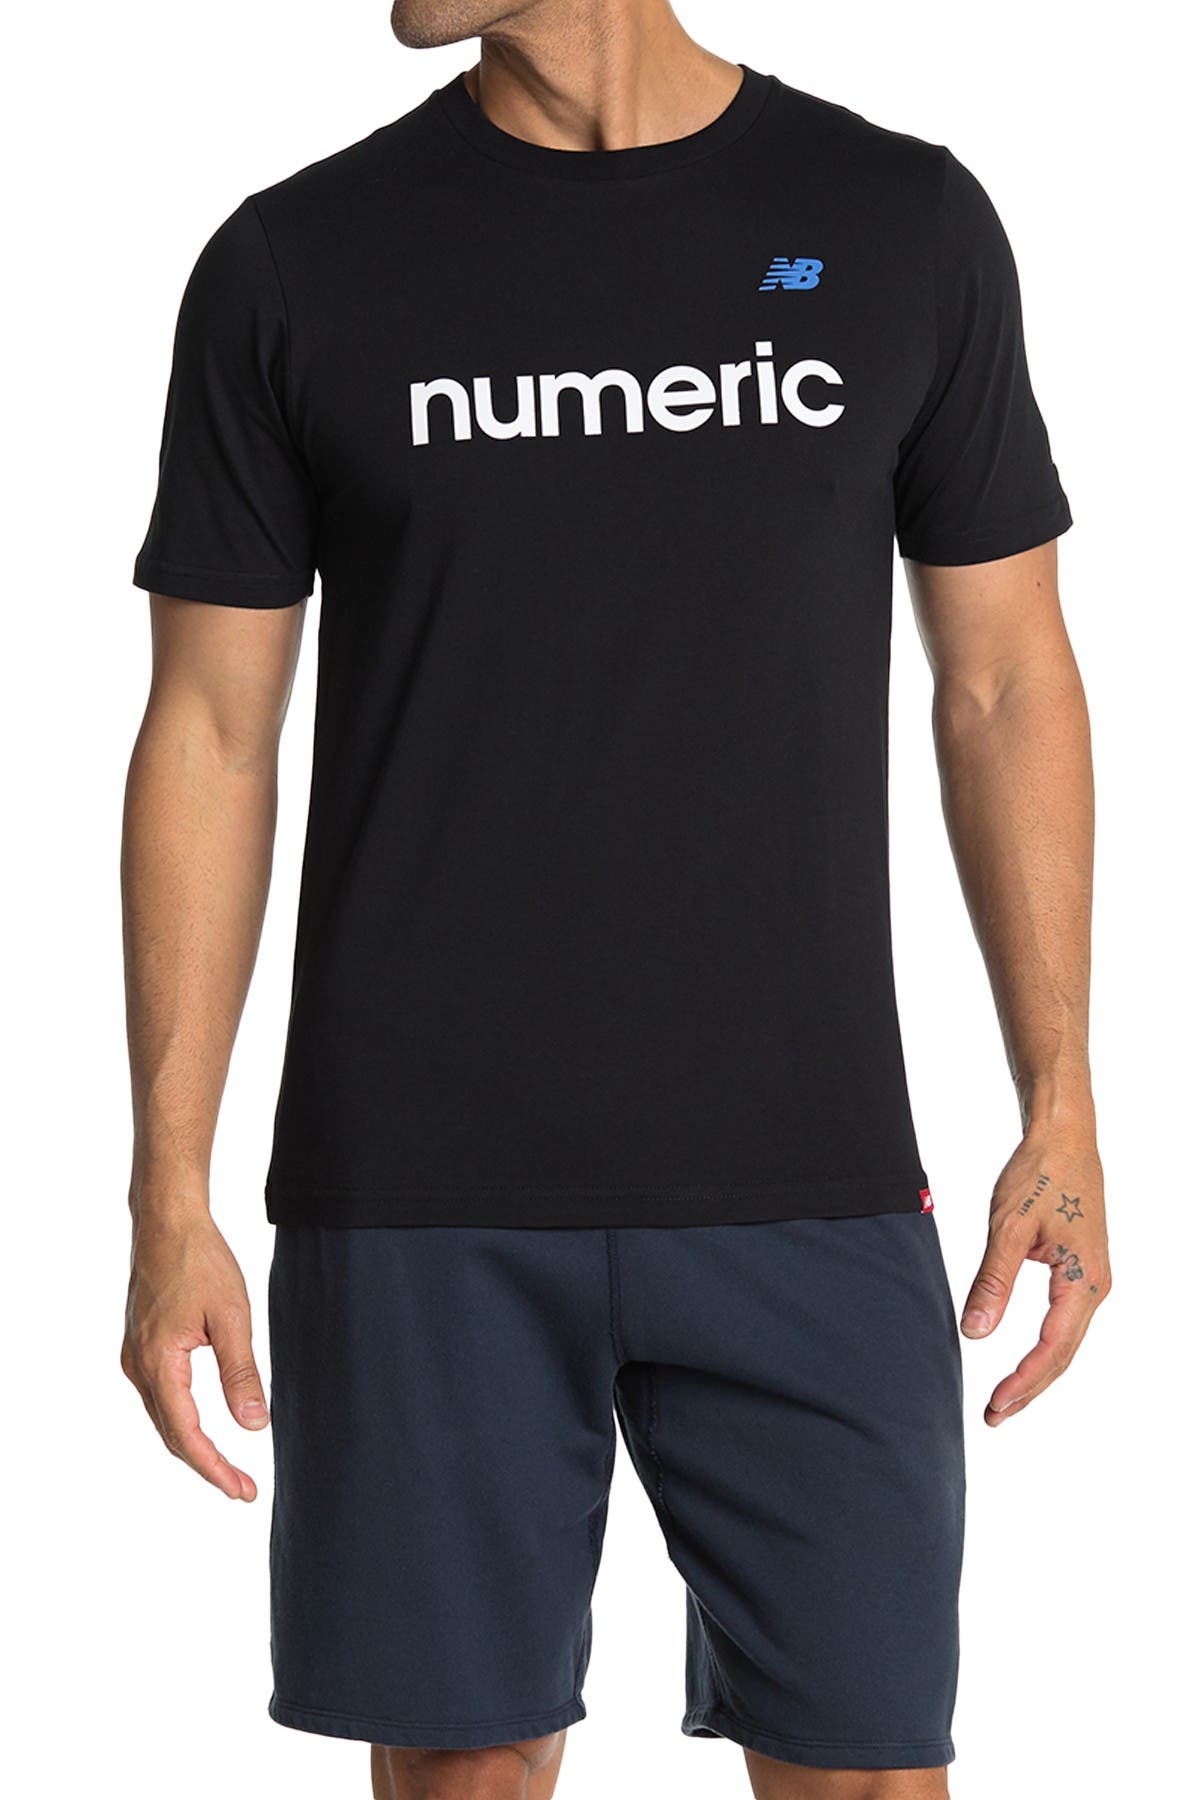 new balance numeric t shirt